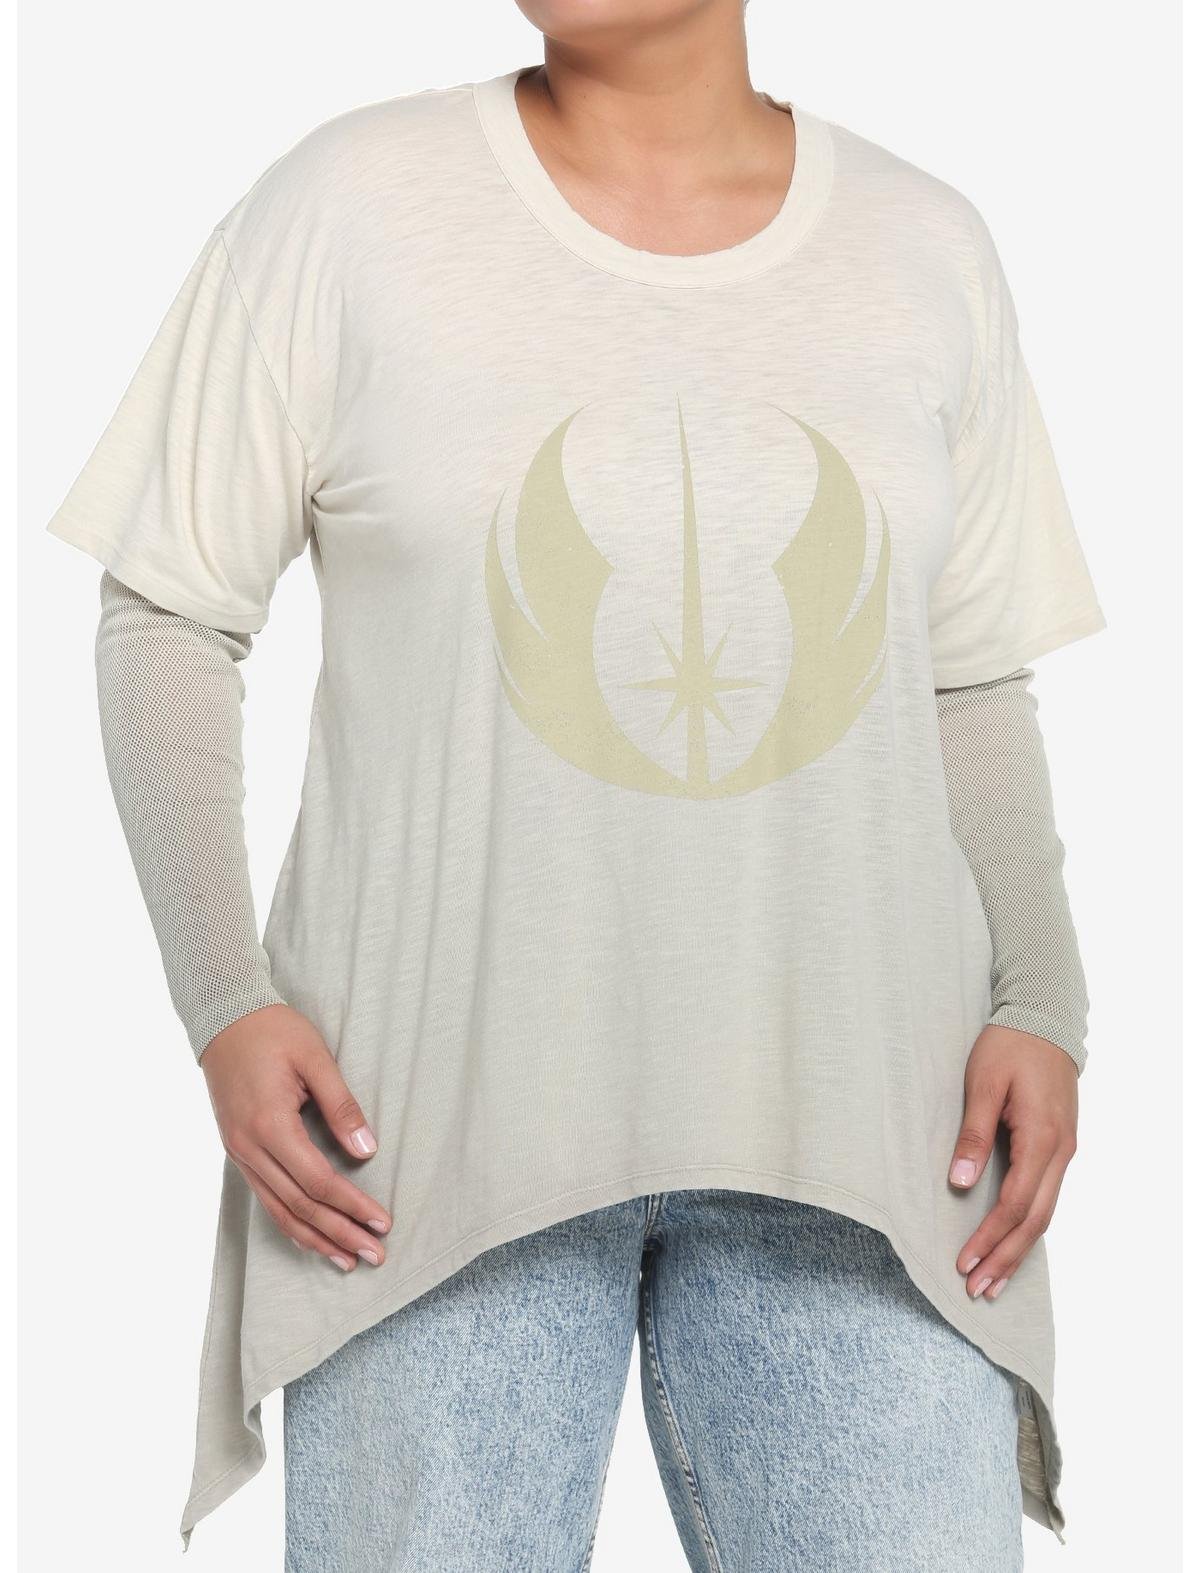 Her Universe Star Wars Obi-Wan Kenobi Jedi Symbol Twofer Long-Sleeve T-Shirt Plus Size